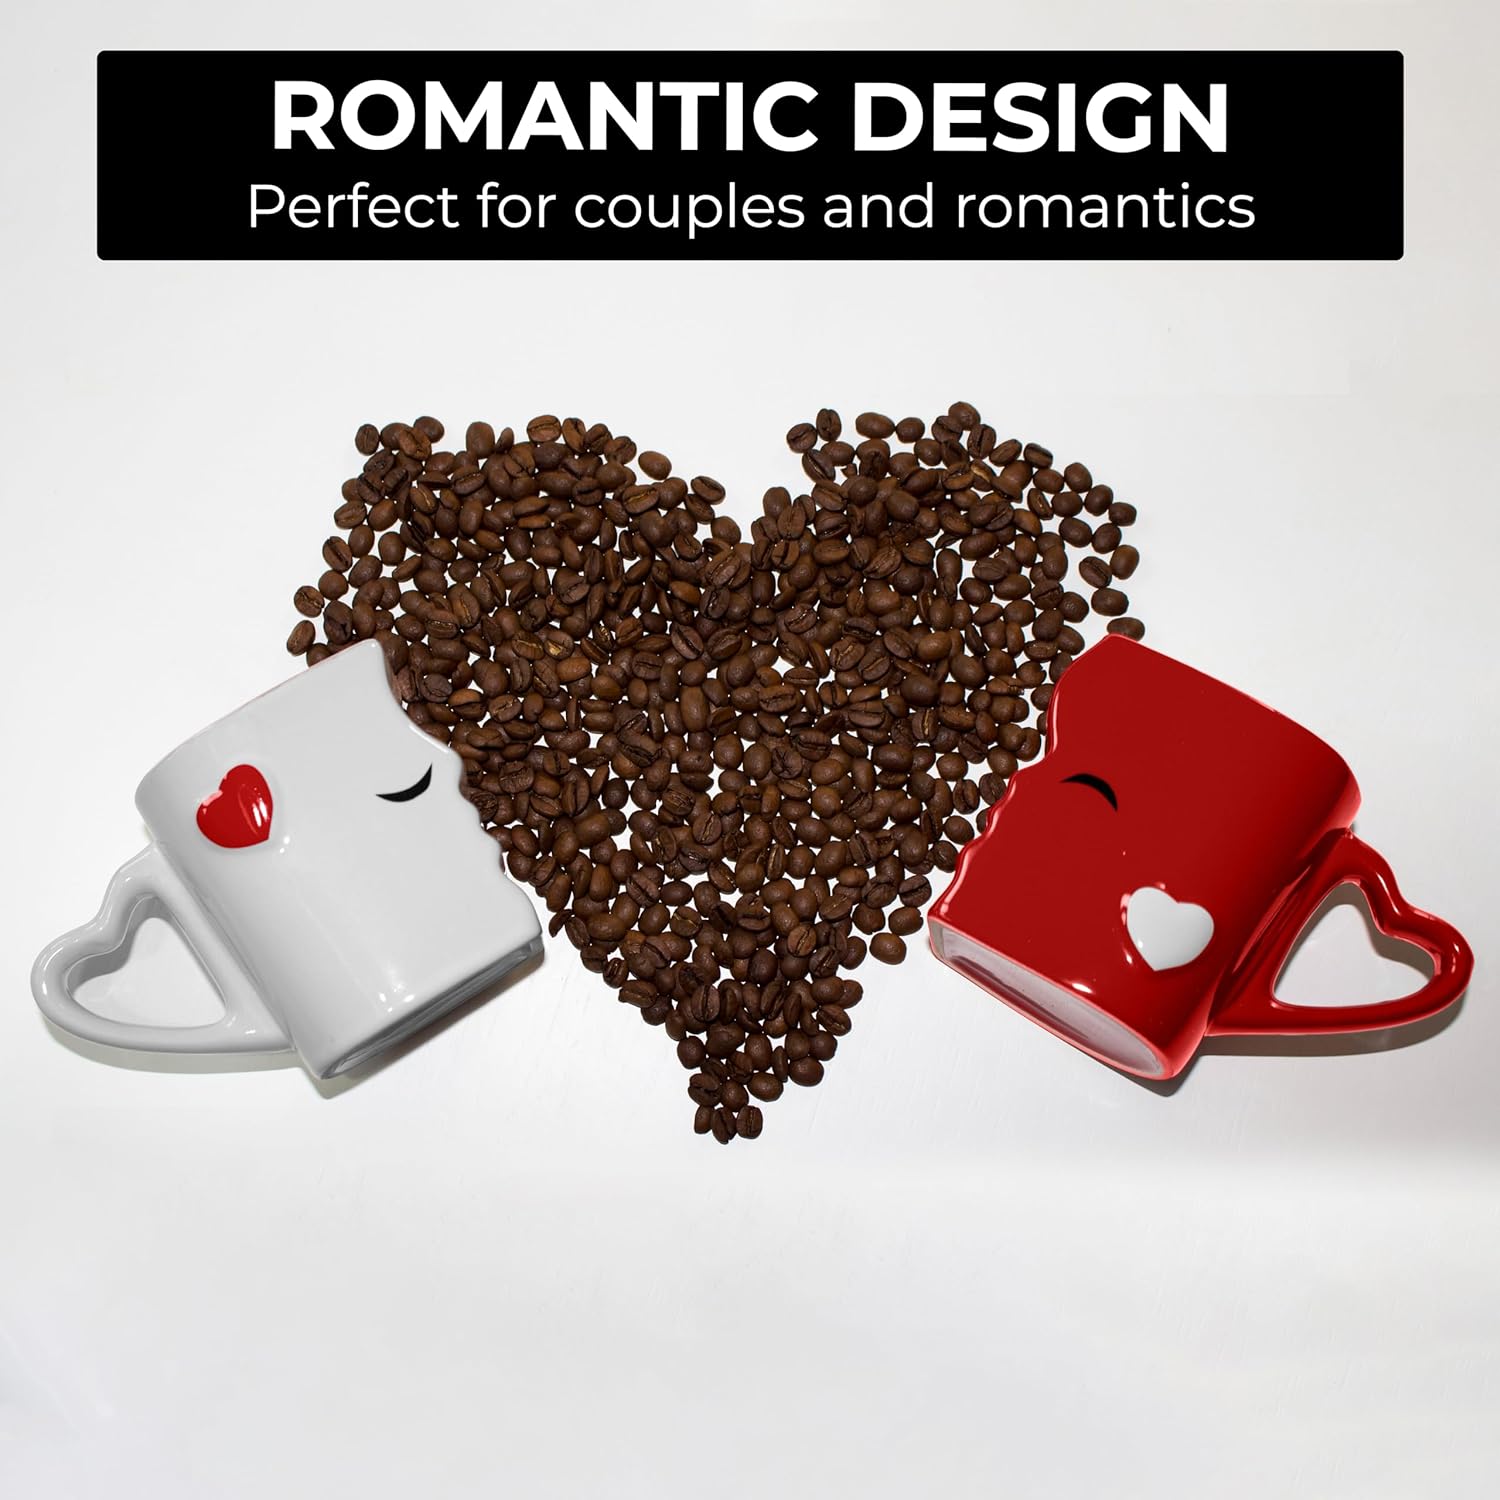 MIAMIO - Coffee Mugs/Kissing Mugs Bridal Pair Gift Set for Weddings/Birthday/Anniversary with Gift Box (Red) 5